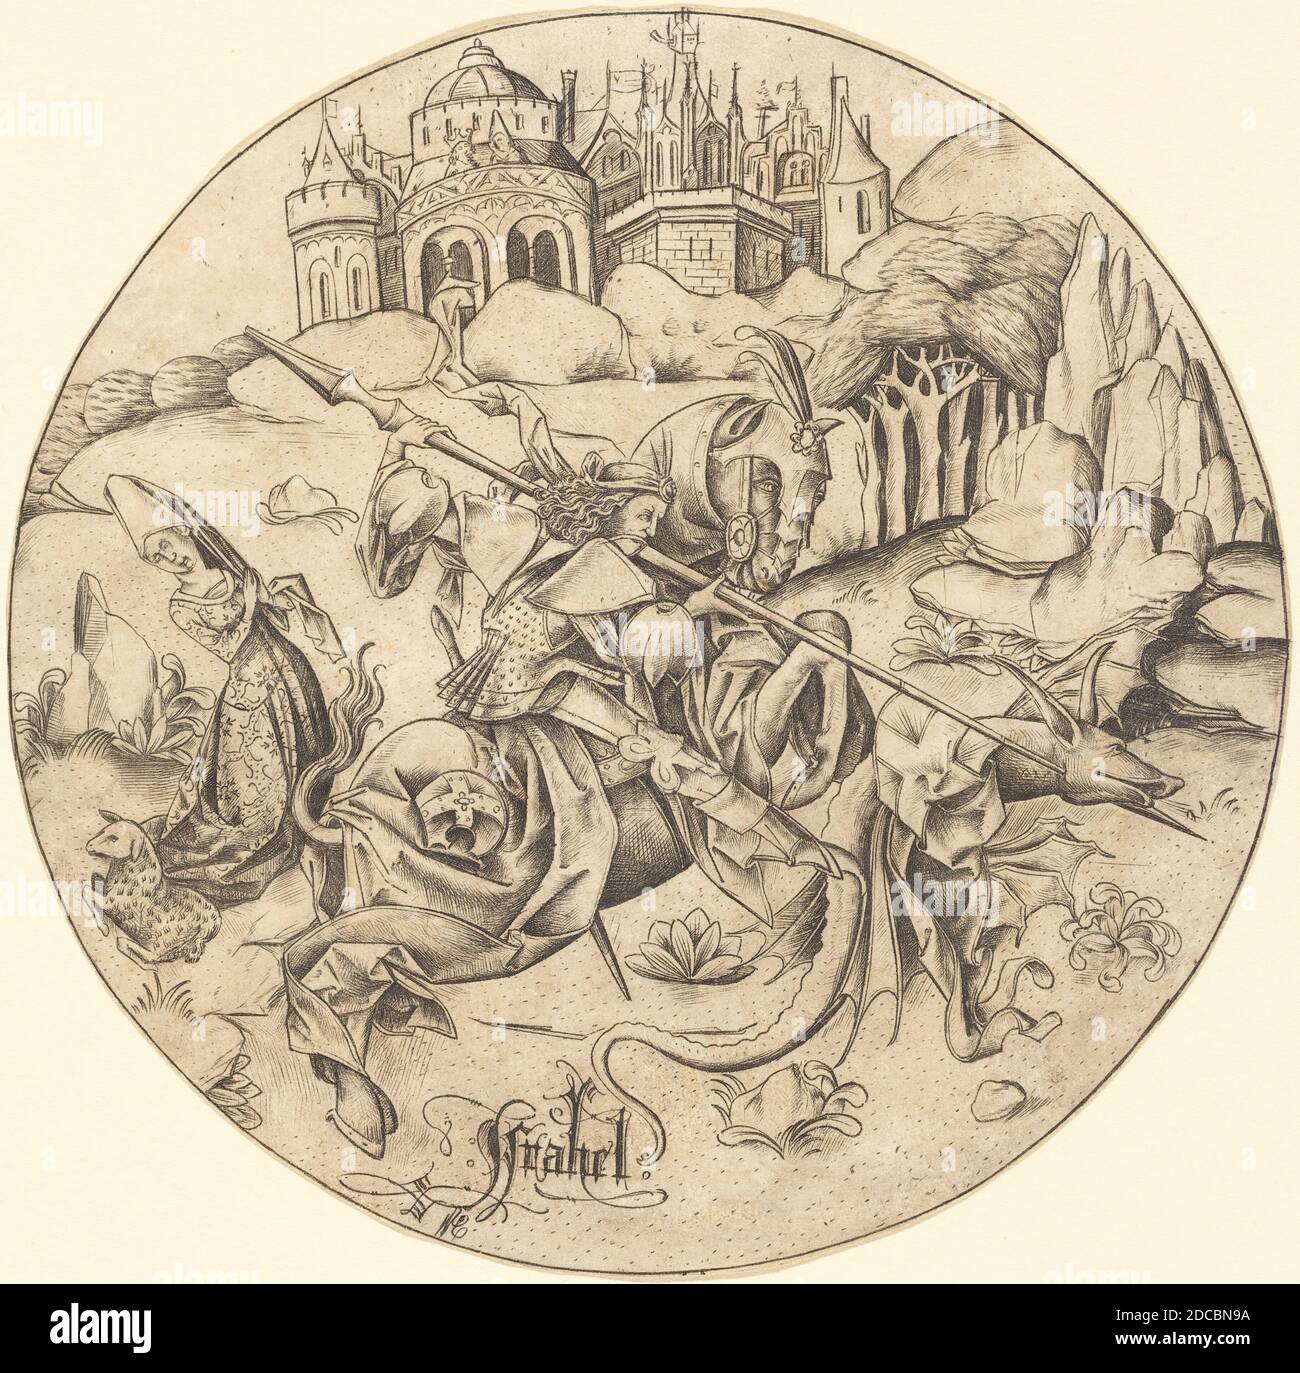 Israhel van Meckenem, (artist), German, c. 1445 - 1503, Saint George and the Dragon, c. 1465/1470, engraving on laid paper, overall (diameter): 17.1 cm (6 3/4 in Stock Photo